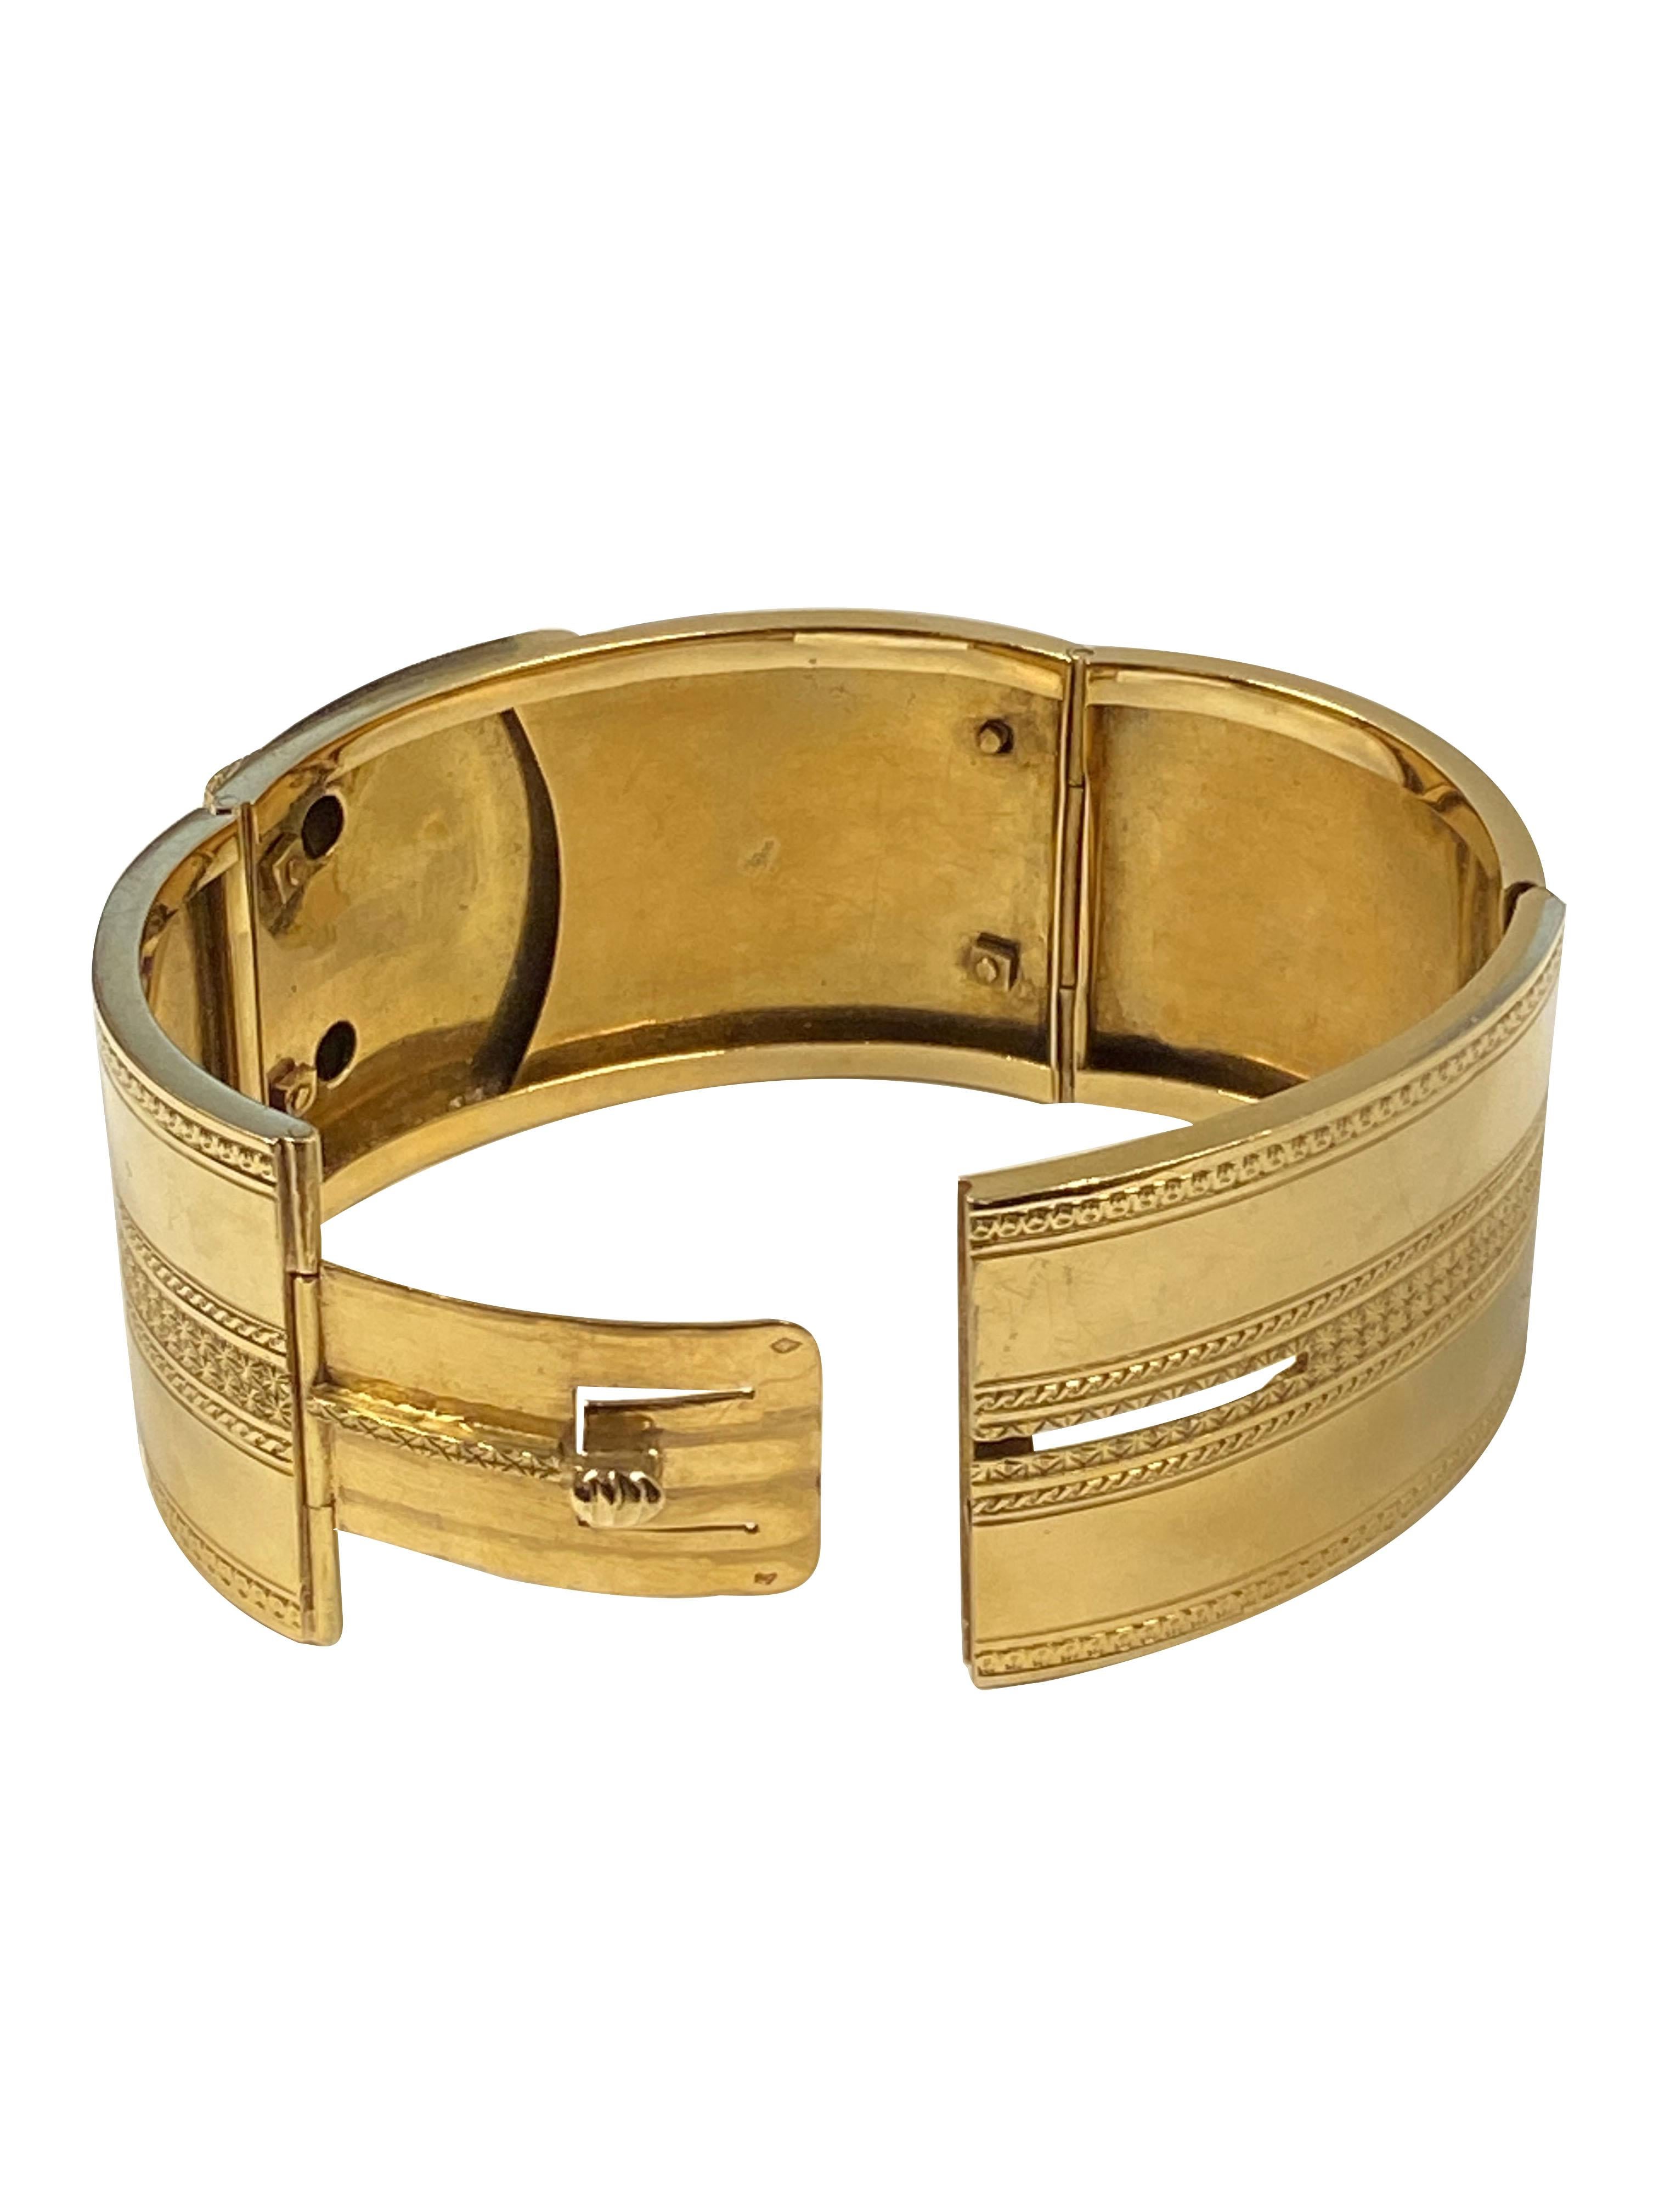 Mixed Cut Victorian Gold and Gem Set Wide Bangle Bracelet